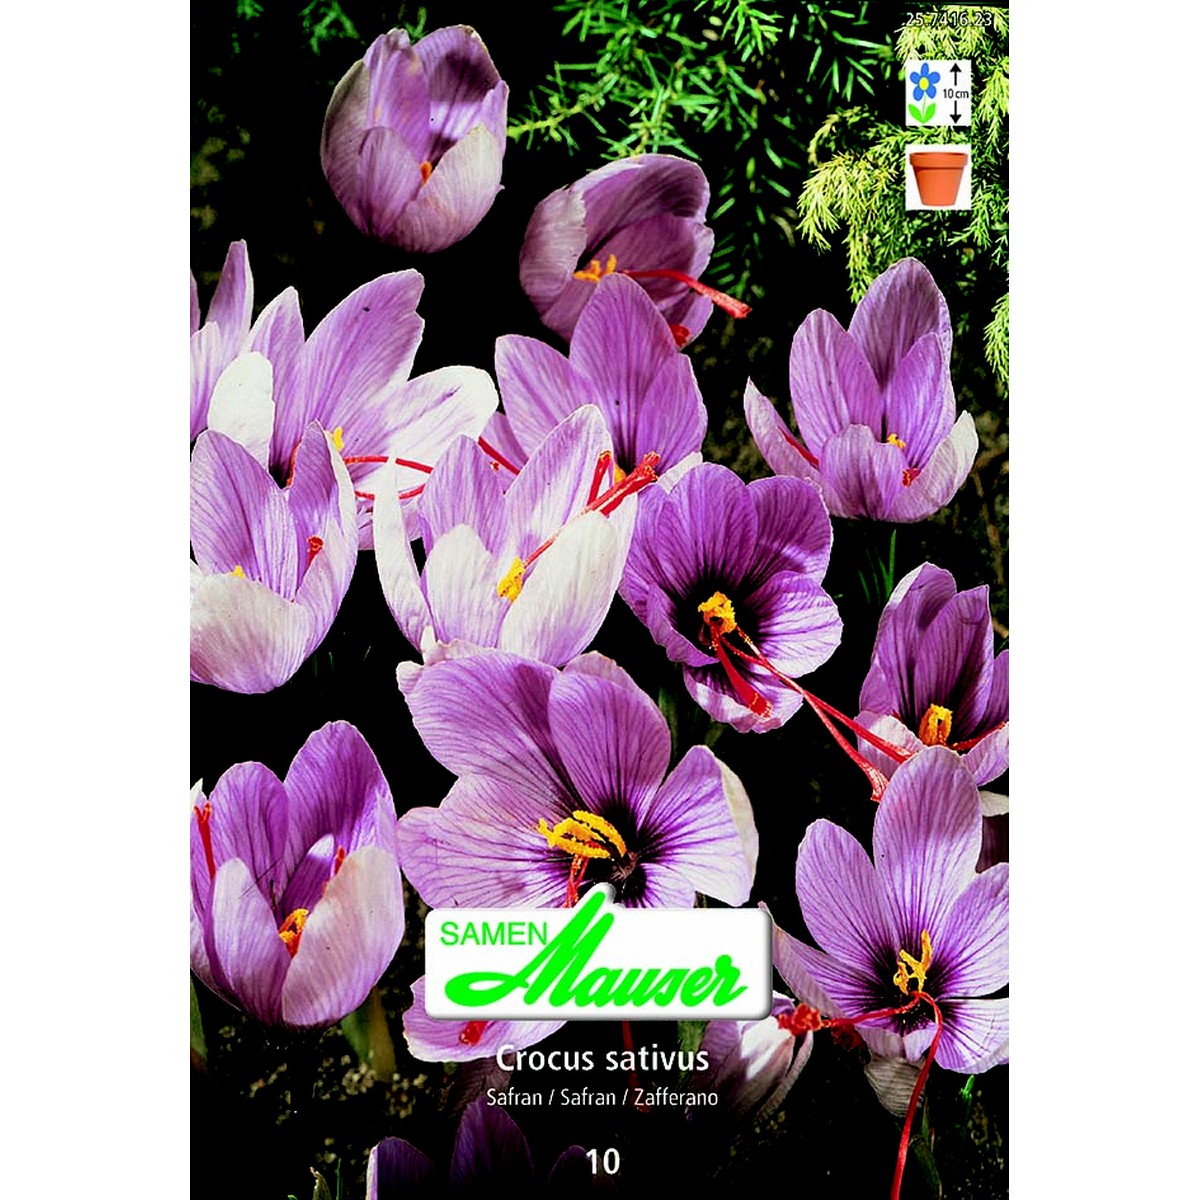   Crocus sativus Safran 10  9/